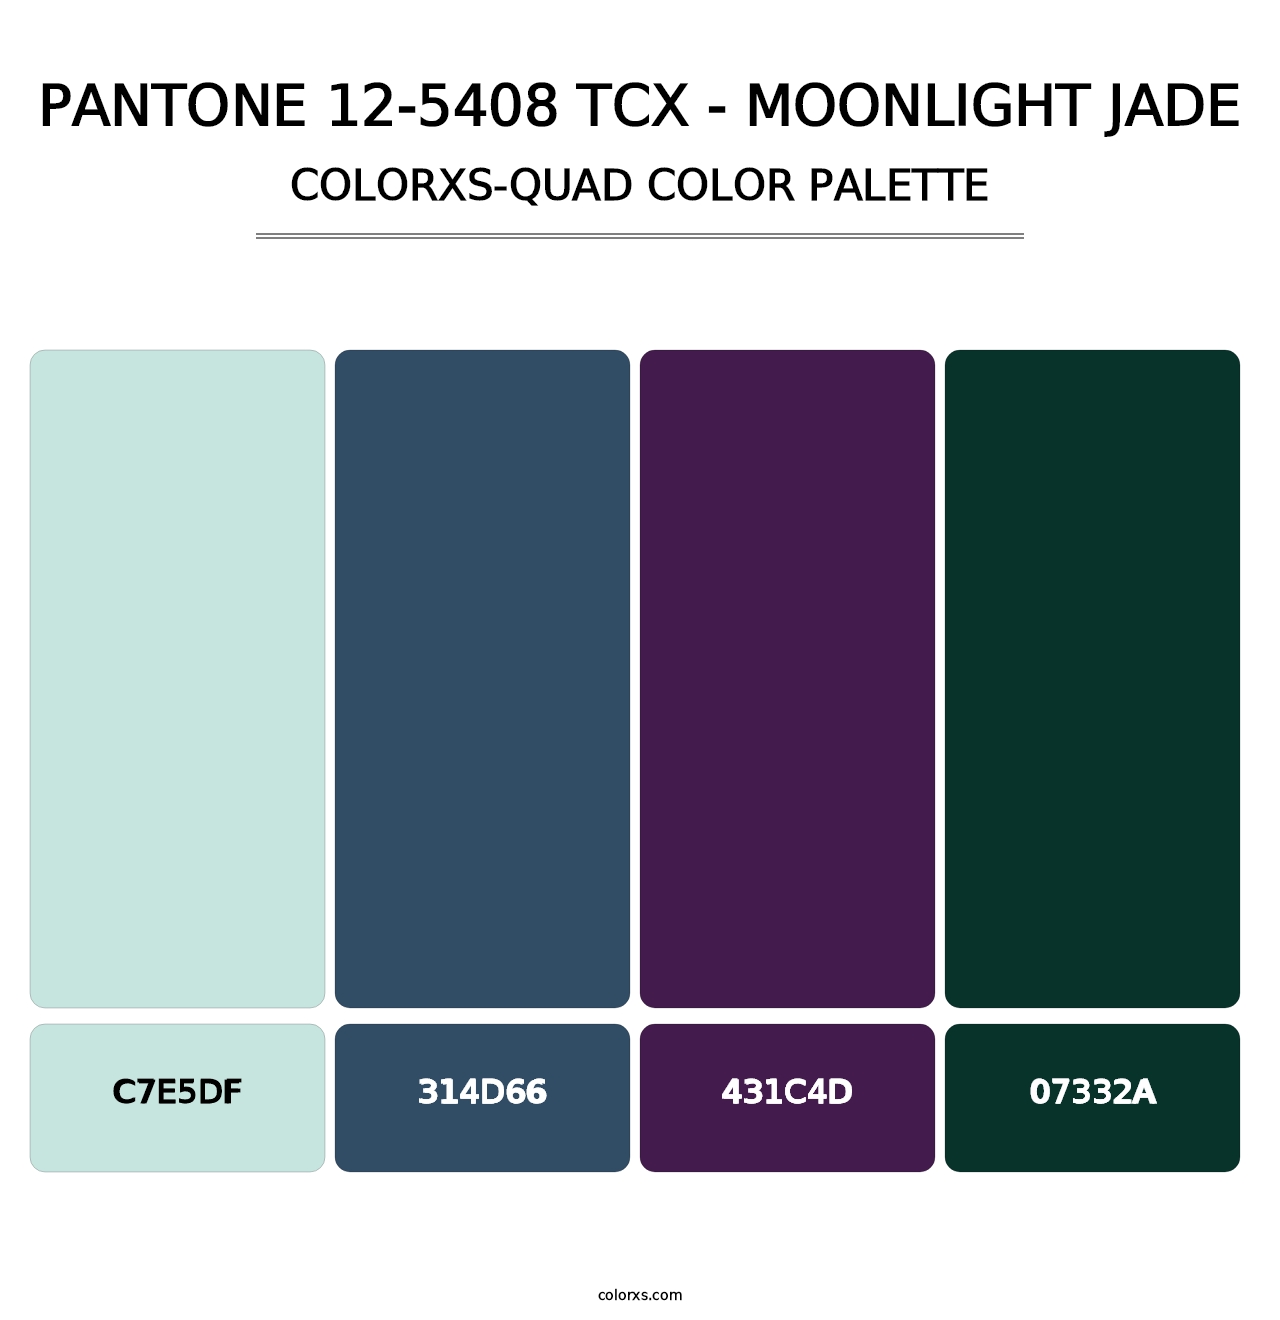 PANTONE 12-5408 TCX - Moonlight Jade - Colorxs Quad Palette